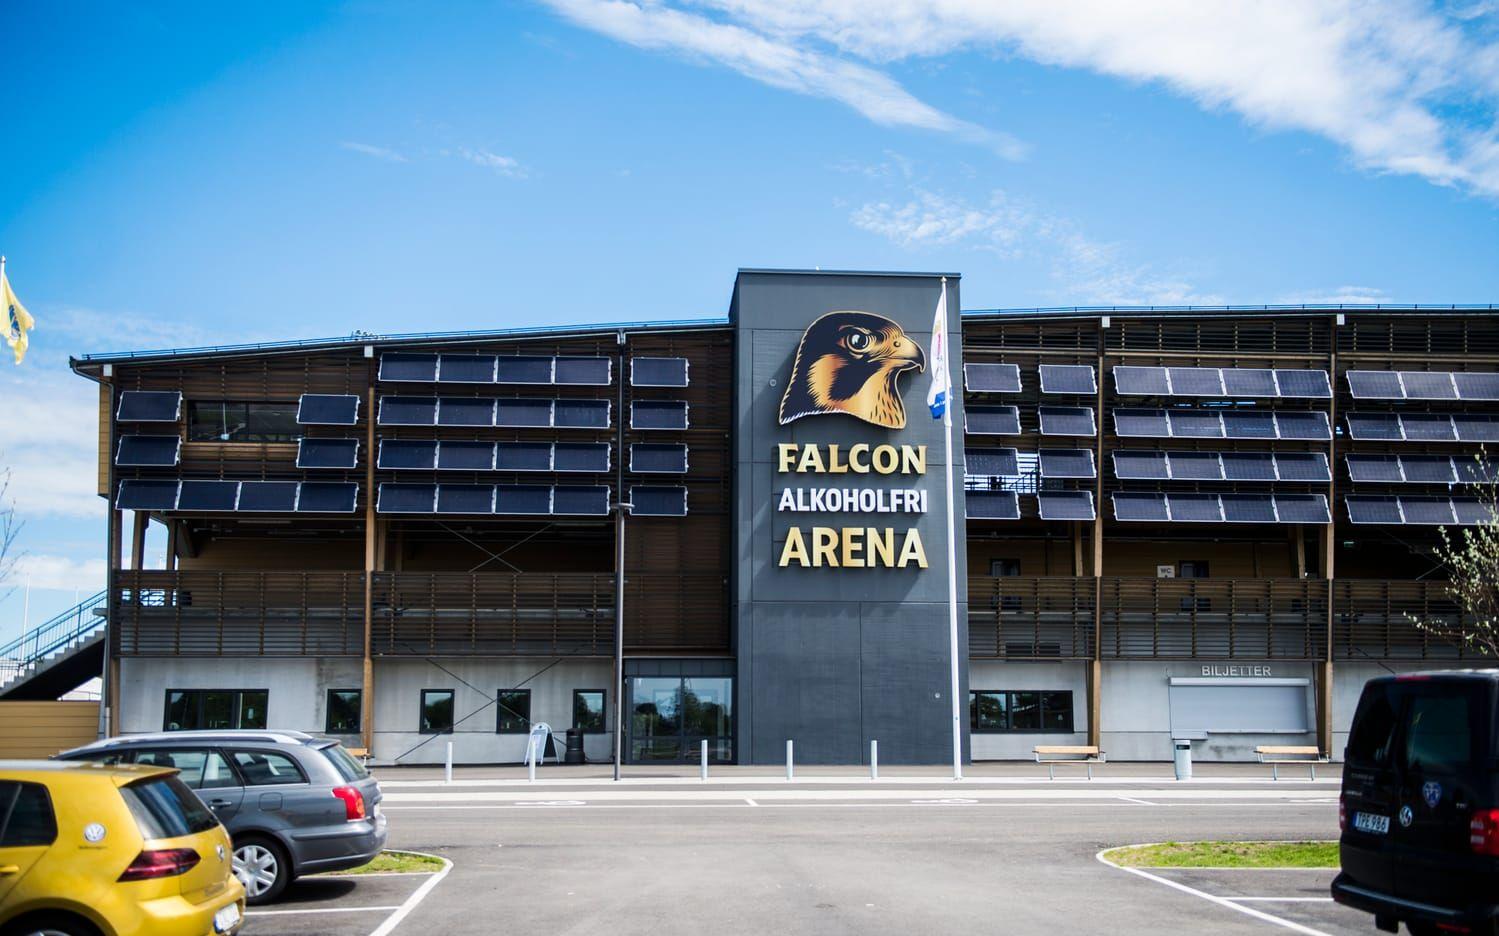 Falcon alkoholfri arena. Bild: Roger Larsson